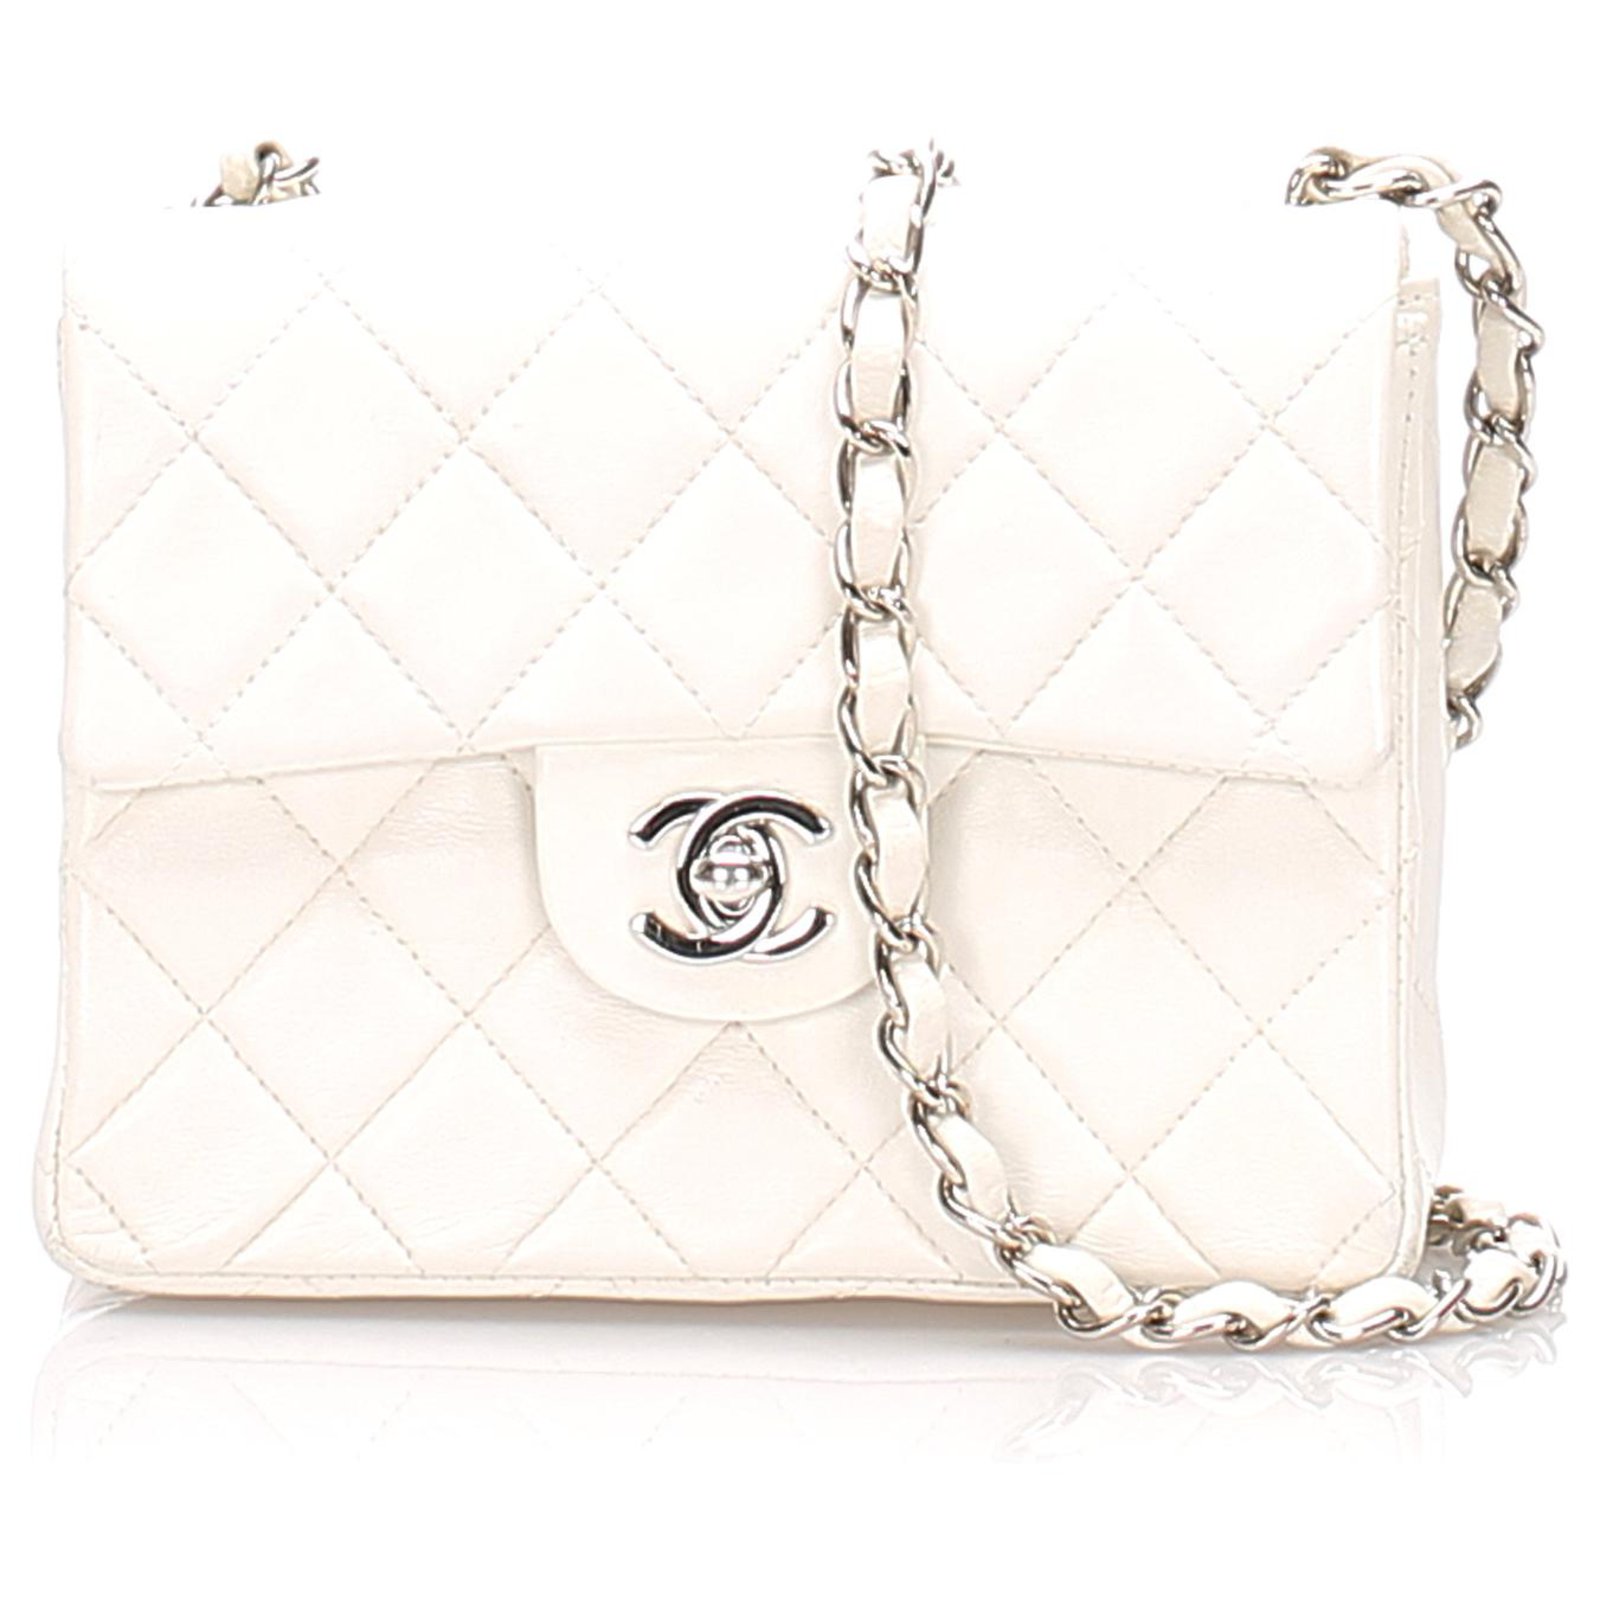 Chanel White Classic Mini Square Lambskin Leather Single Flap Bag